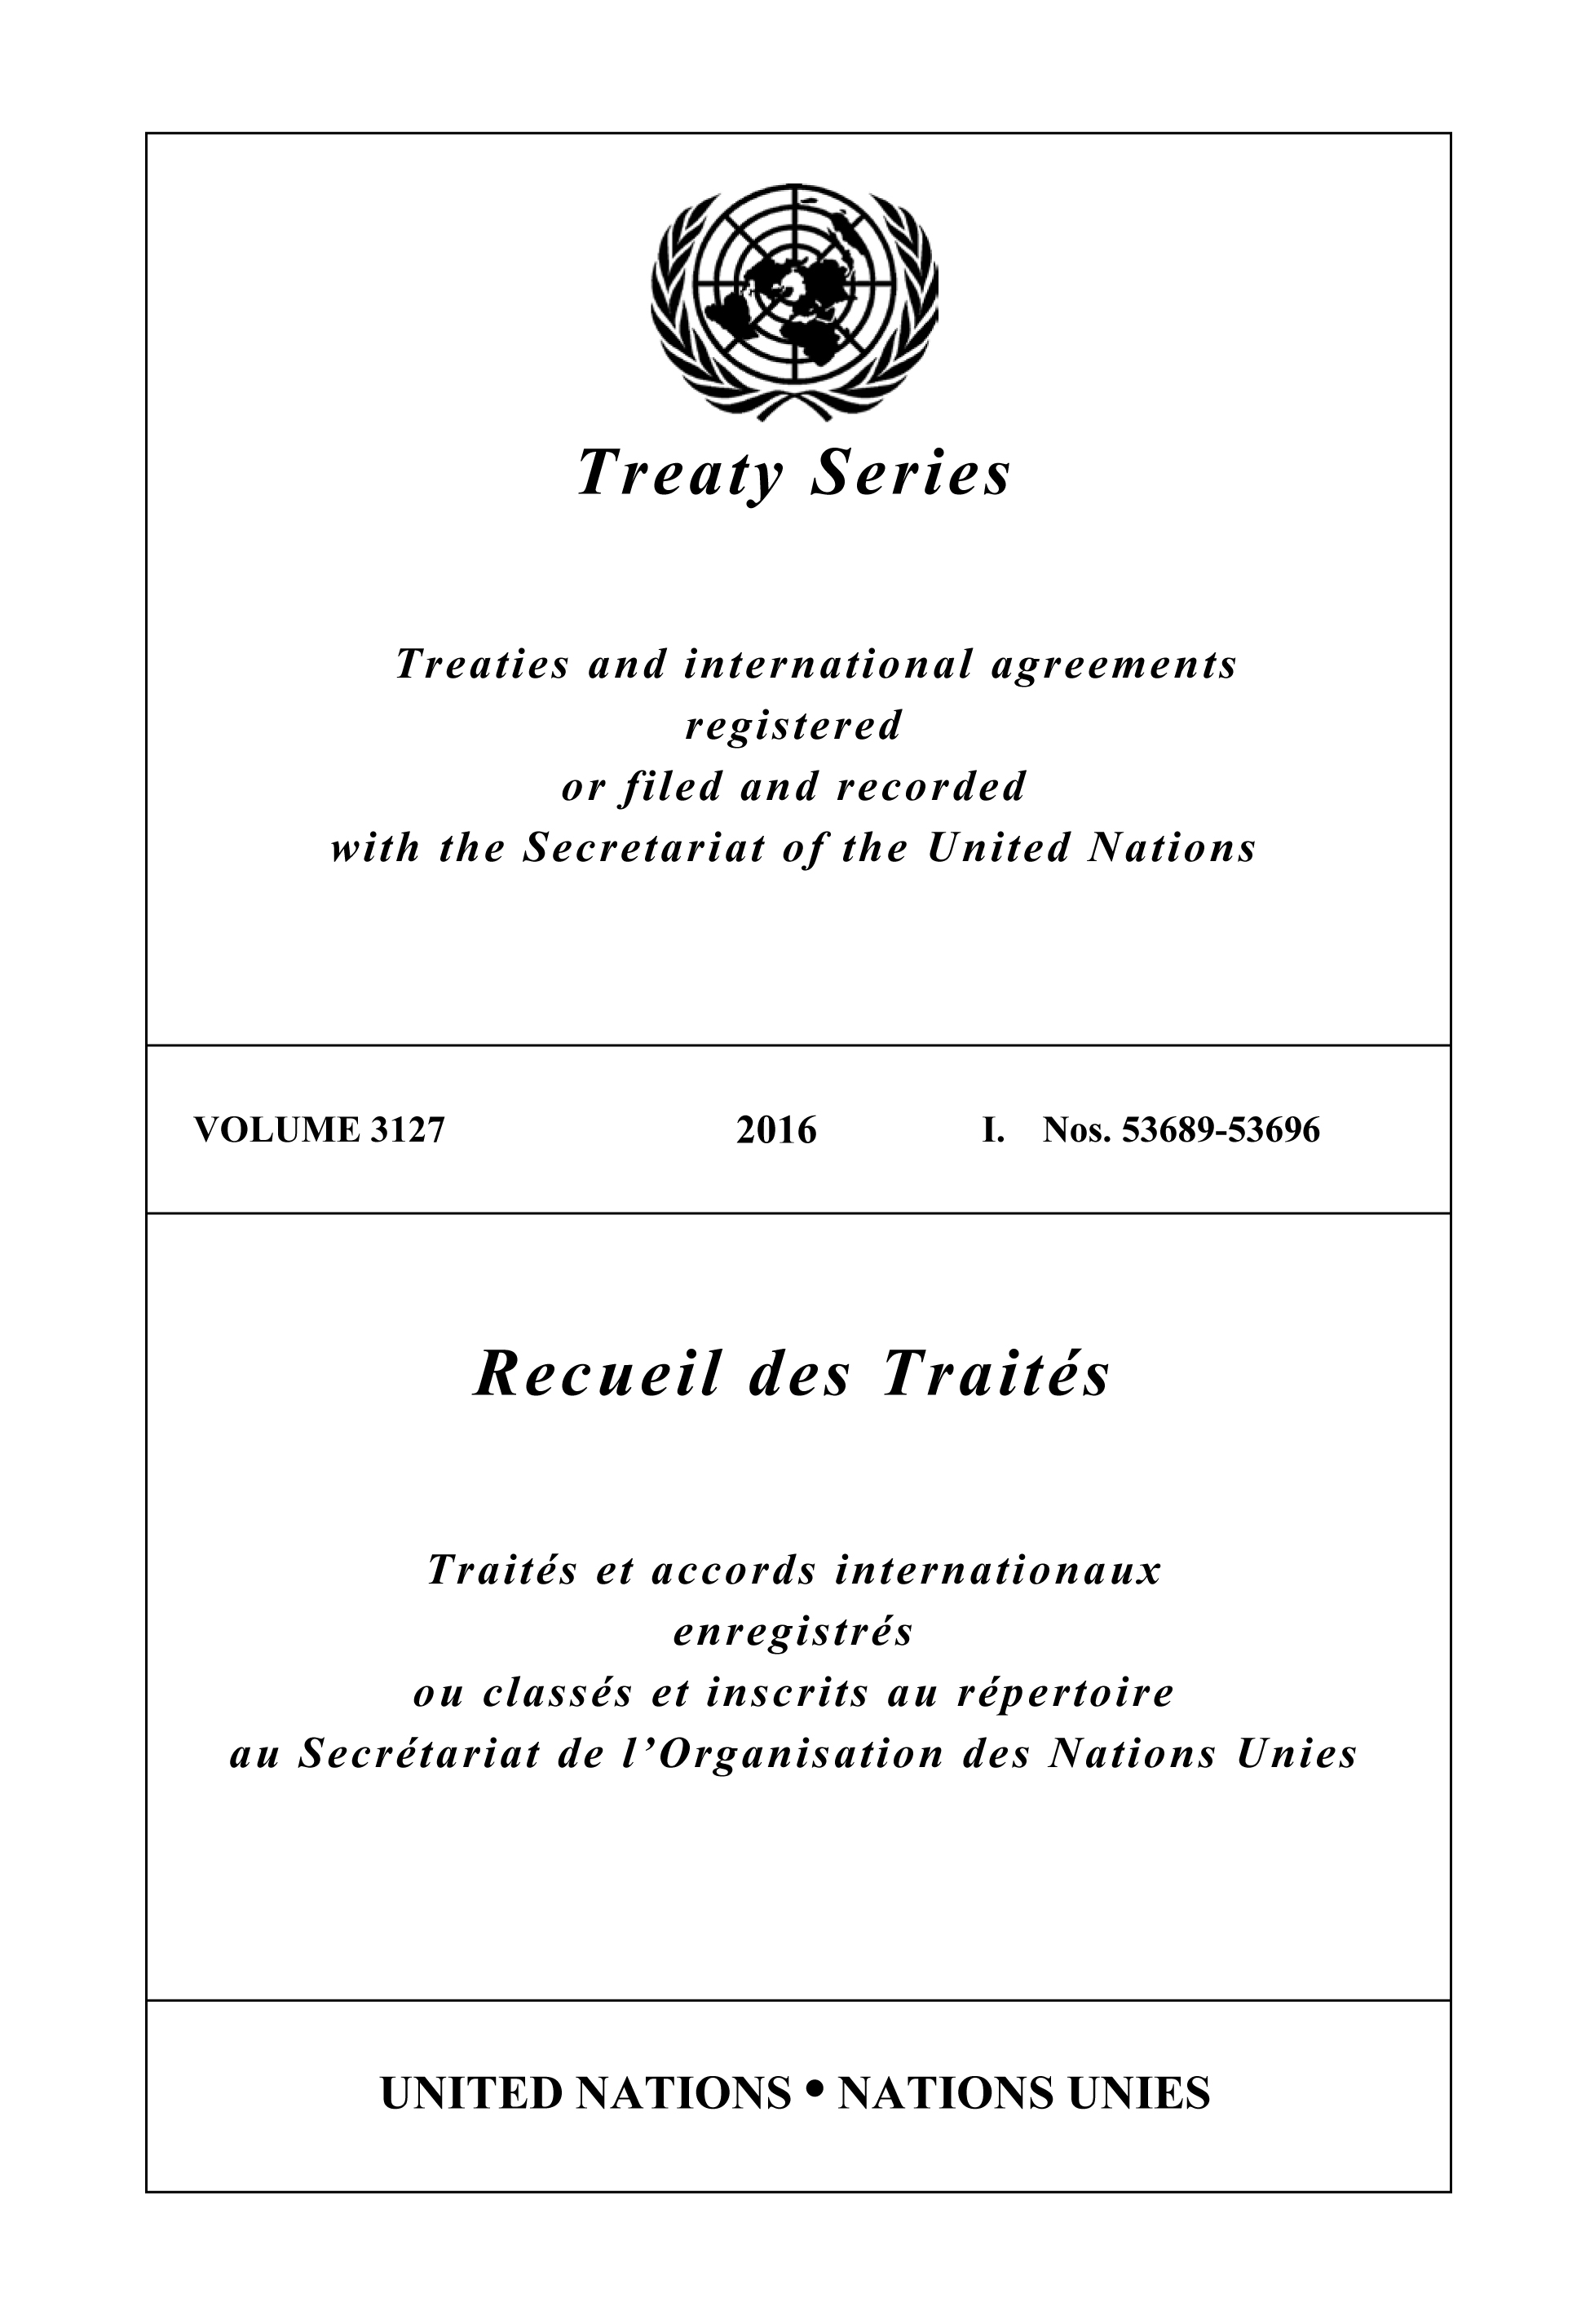 image of Treaty Series 3127